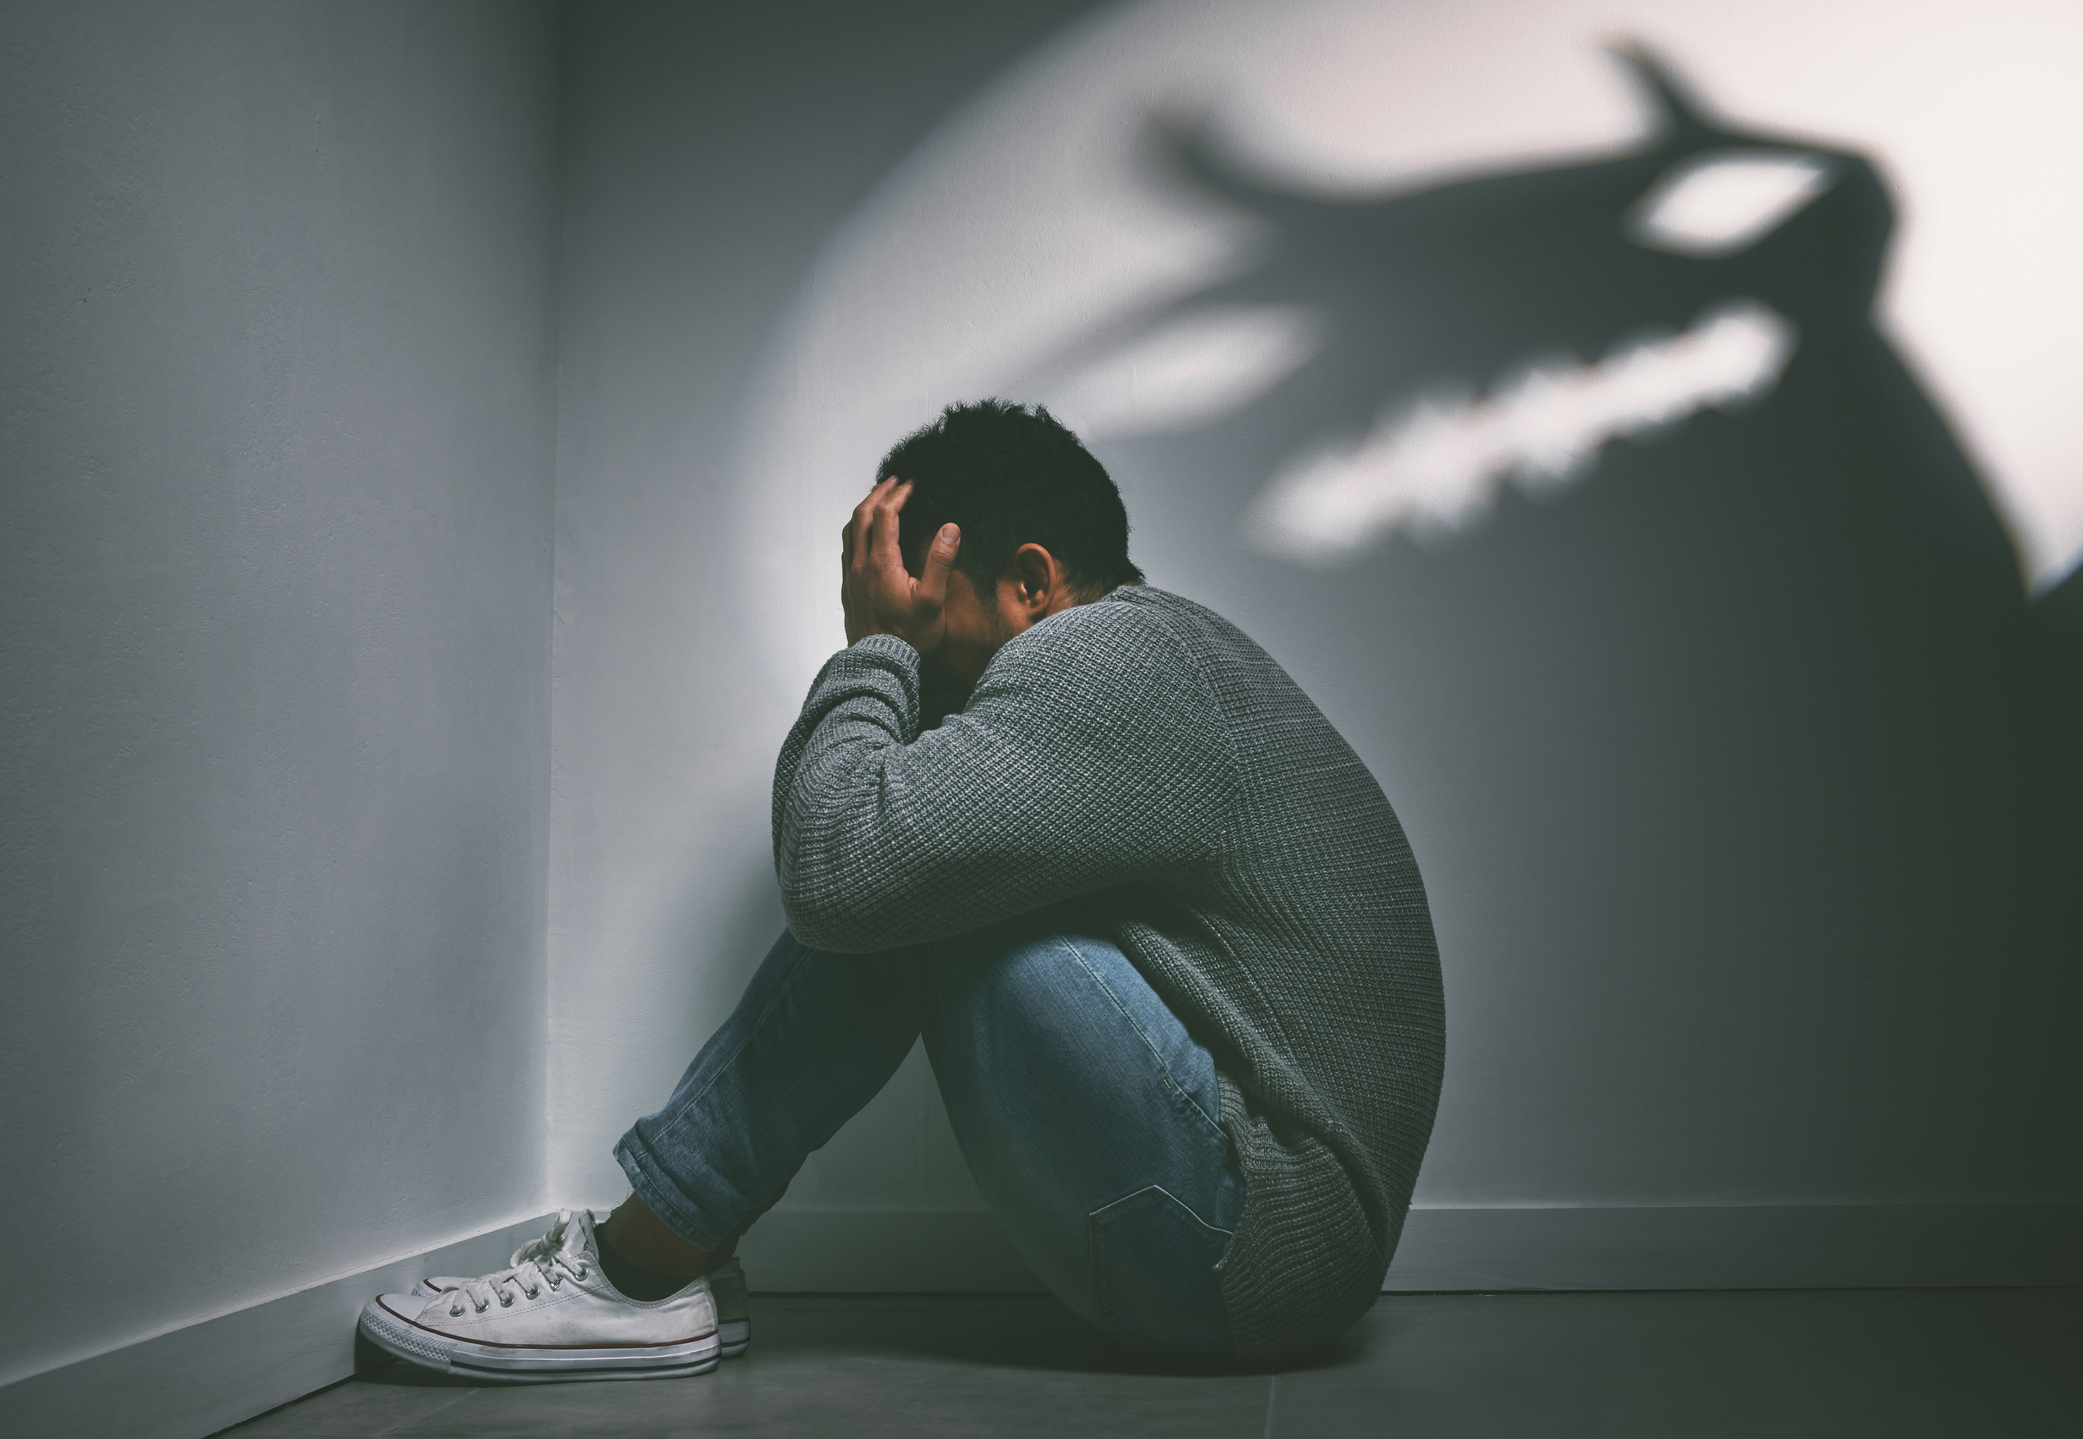 The Shame Game: Why Won’t Mental Health’s Stigma Go Away?